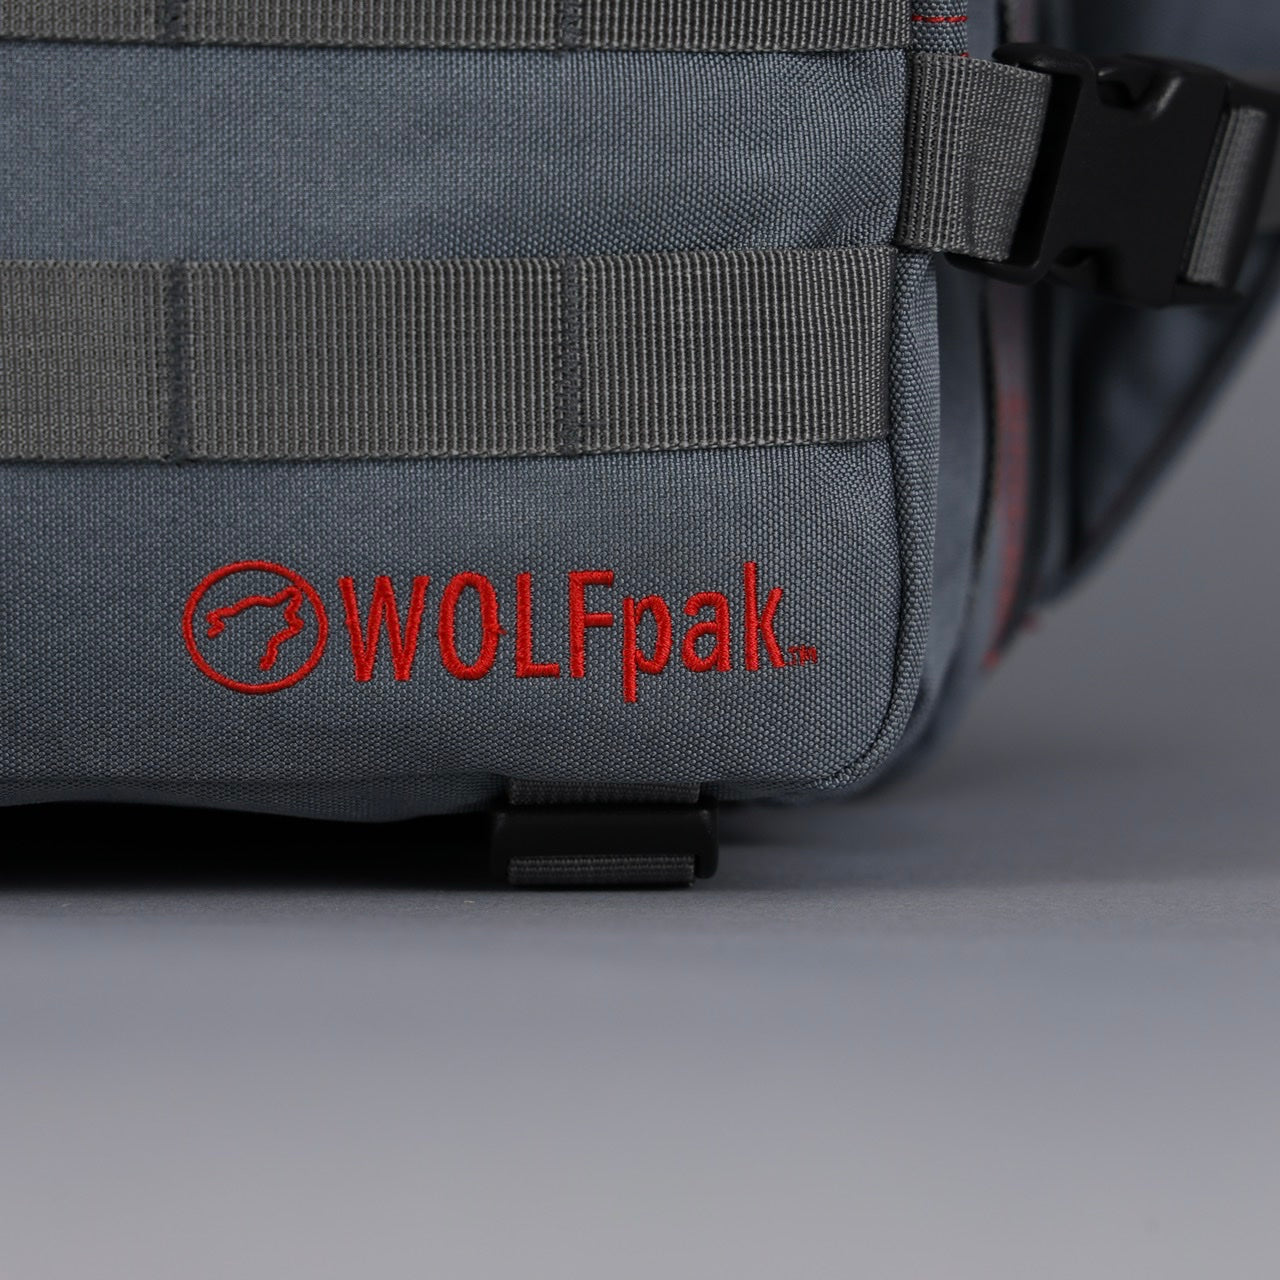 45L Backpack Anvil Gray